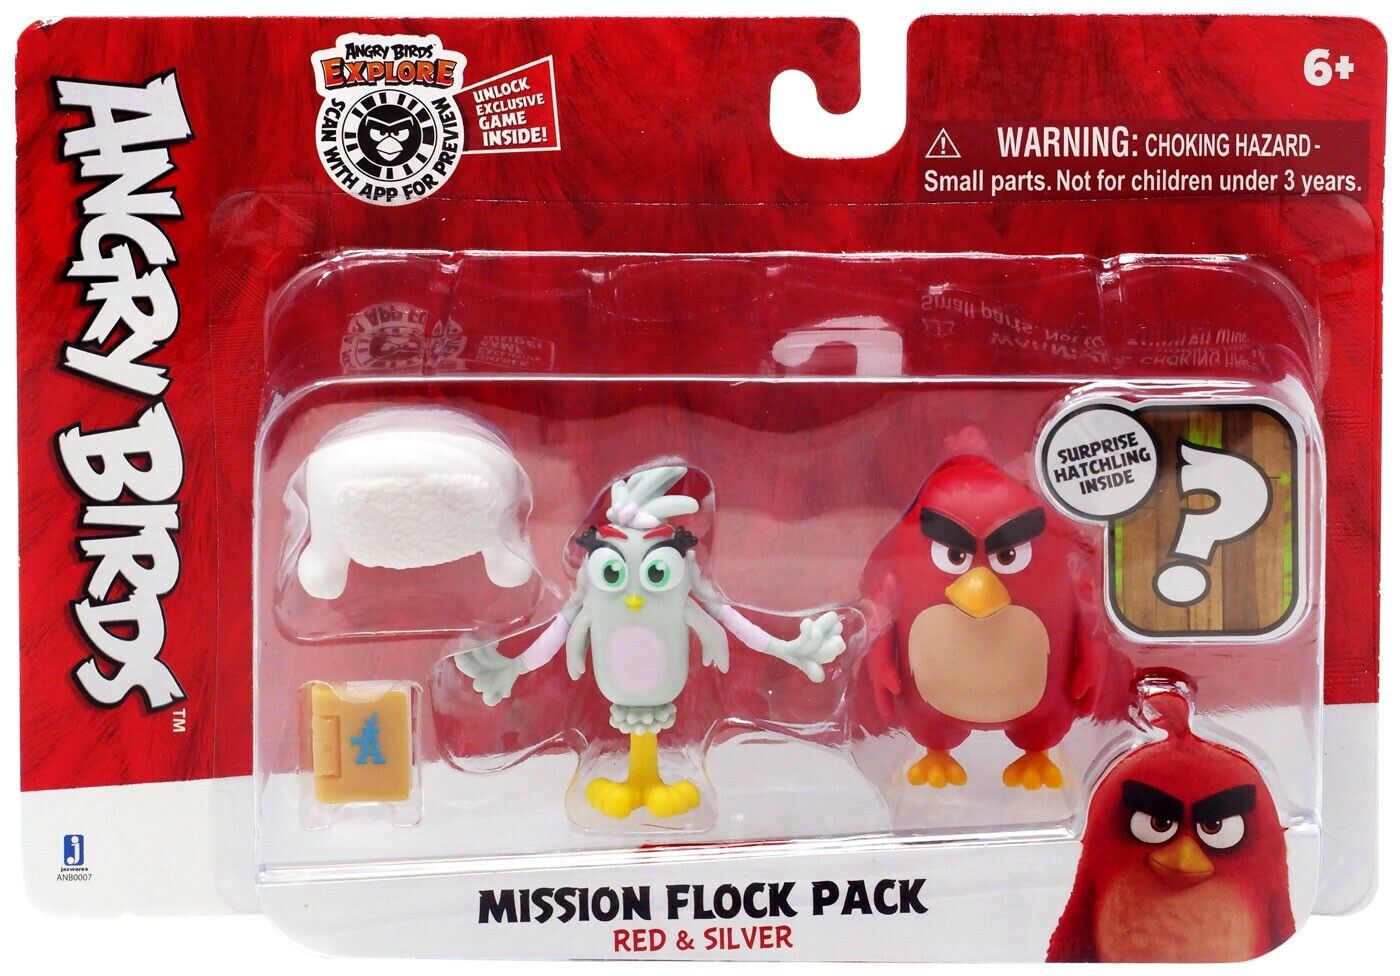 Angry Birds Mission Flock Pack Red & Silver Figures Surprise Hatchling Inside